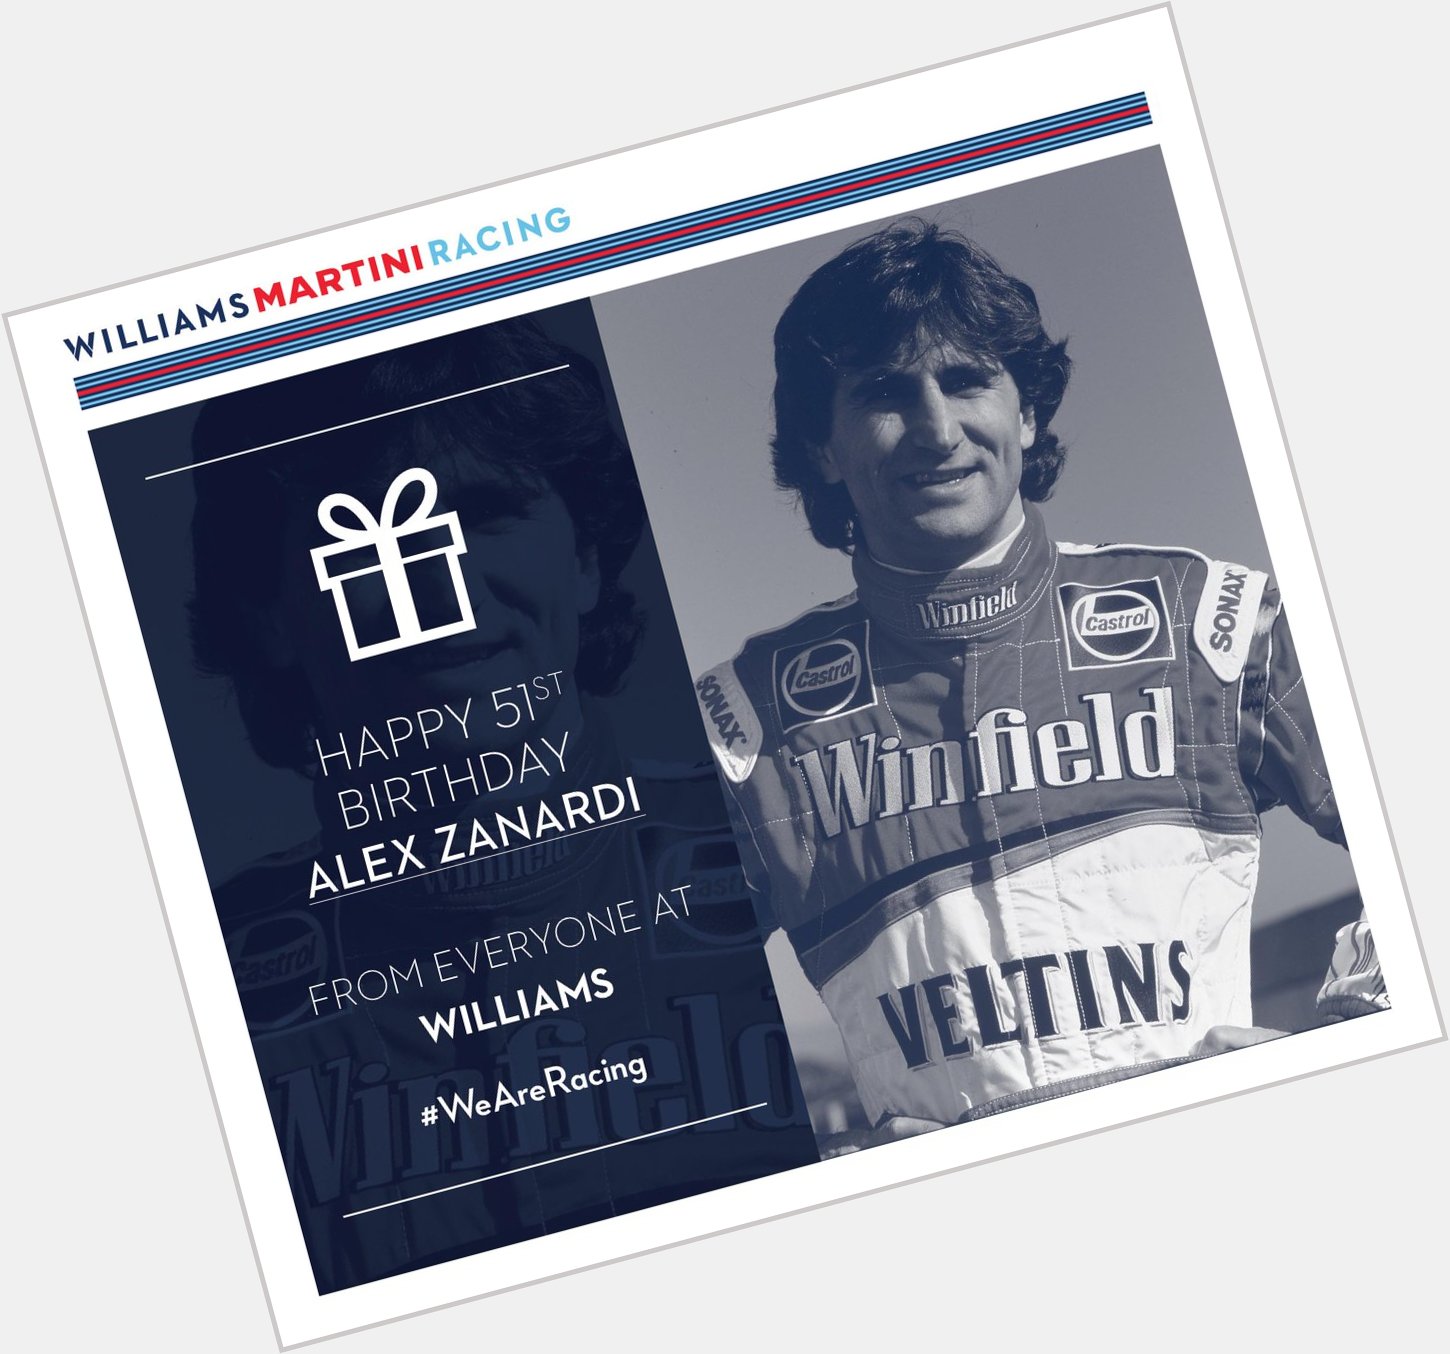 Happy Birthday Alex Zanardi, from all at Williams! 